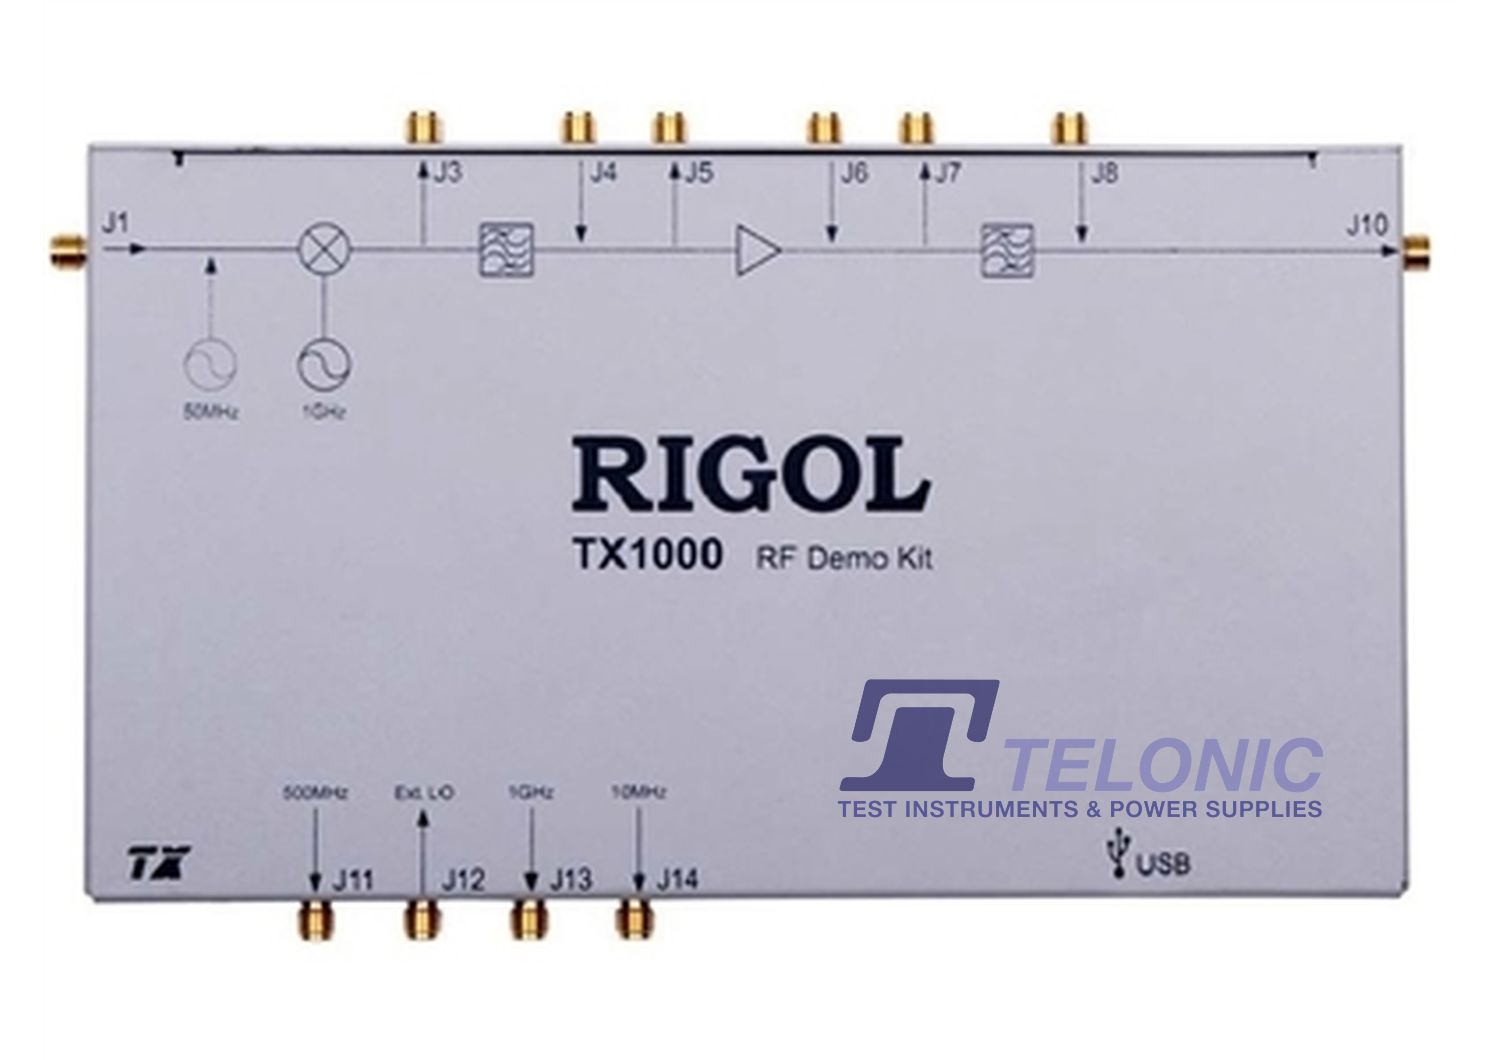 Rigol TX1000 RF Transmitter Demo Kit